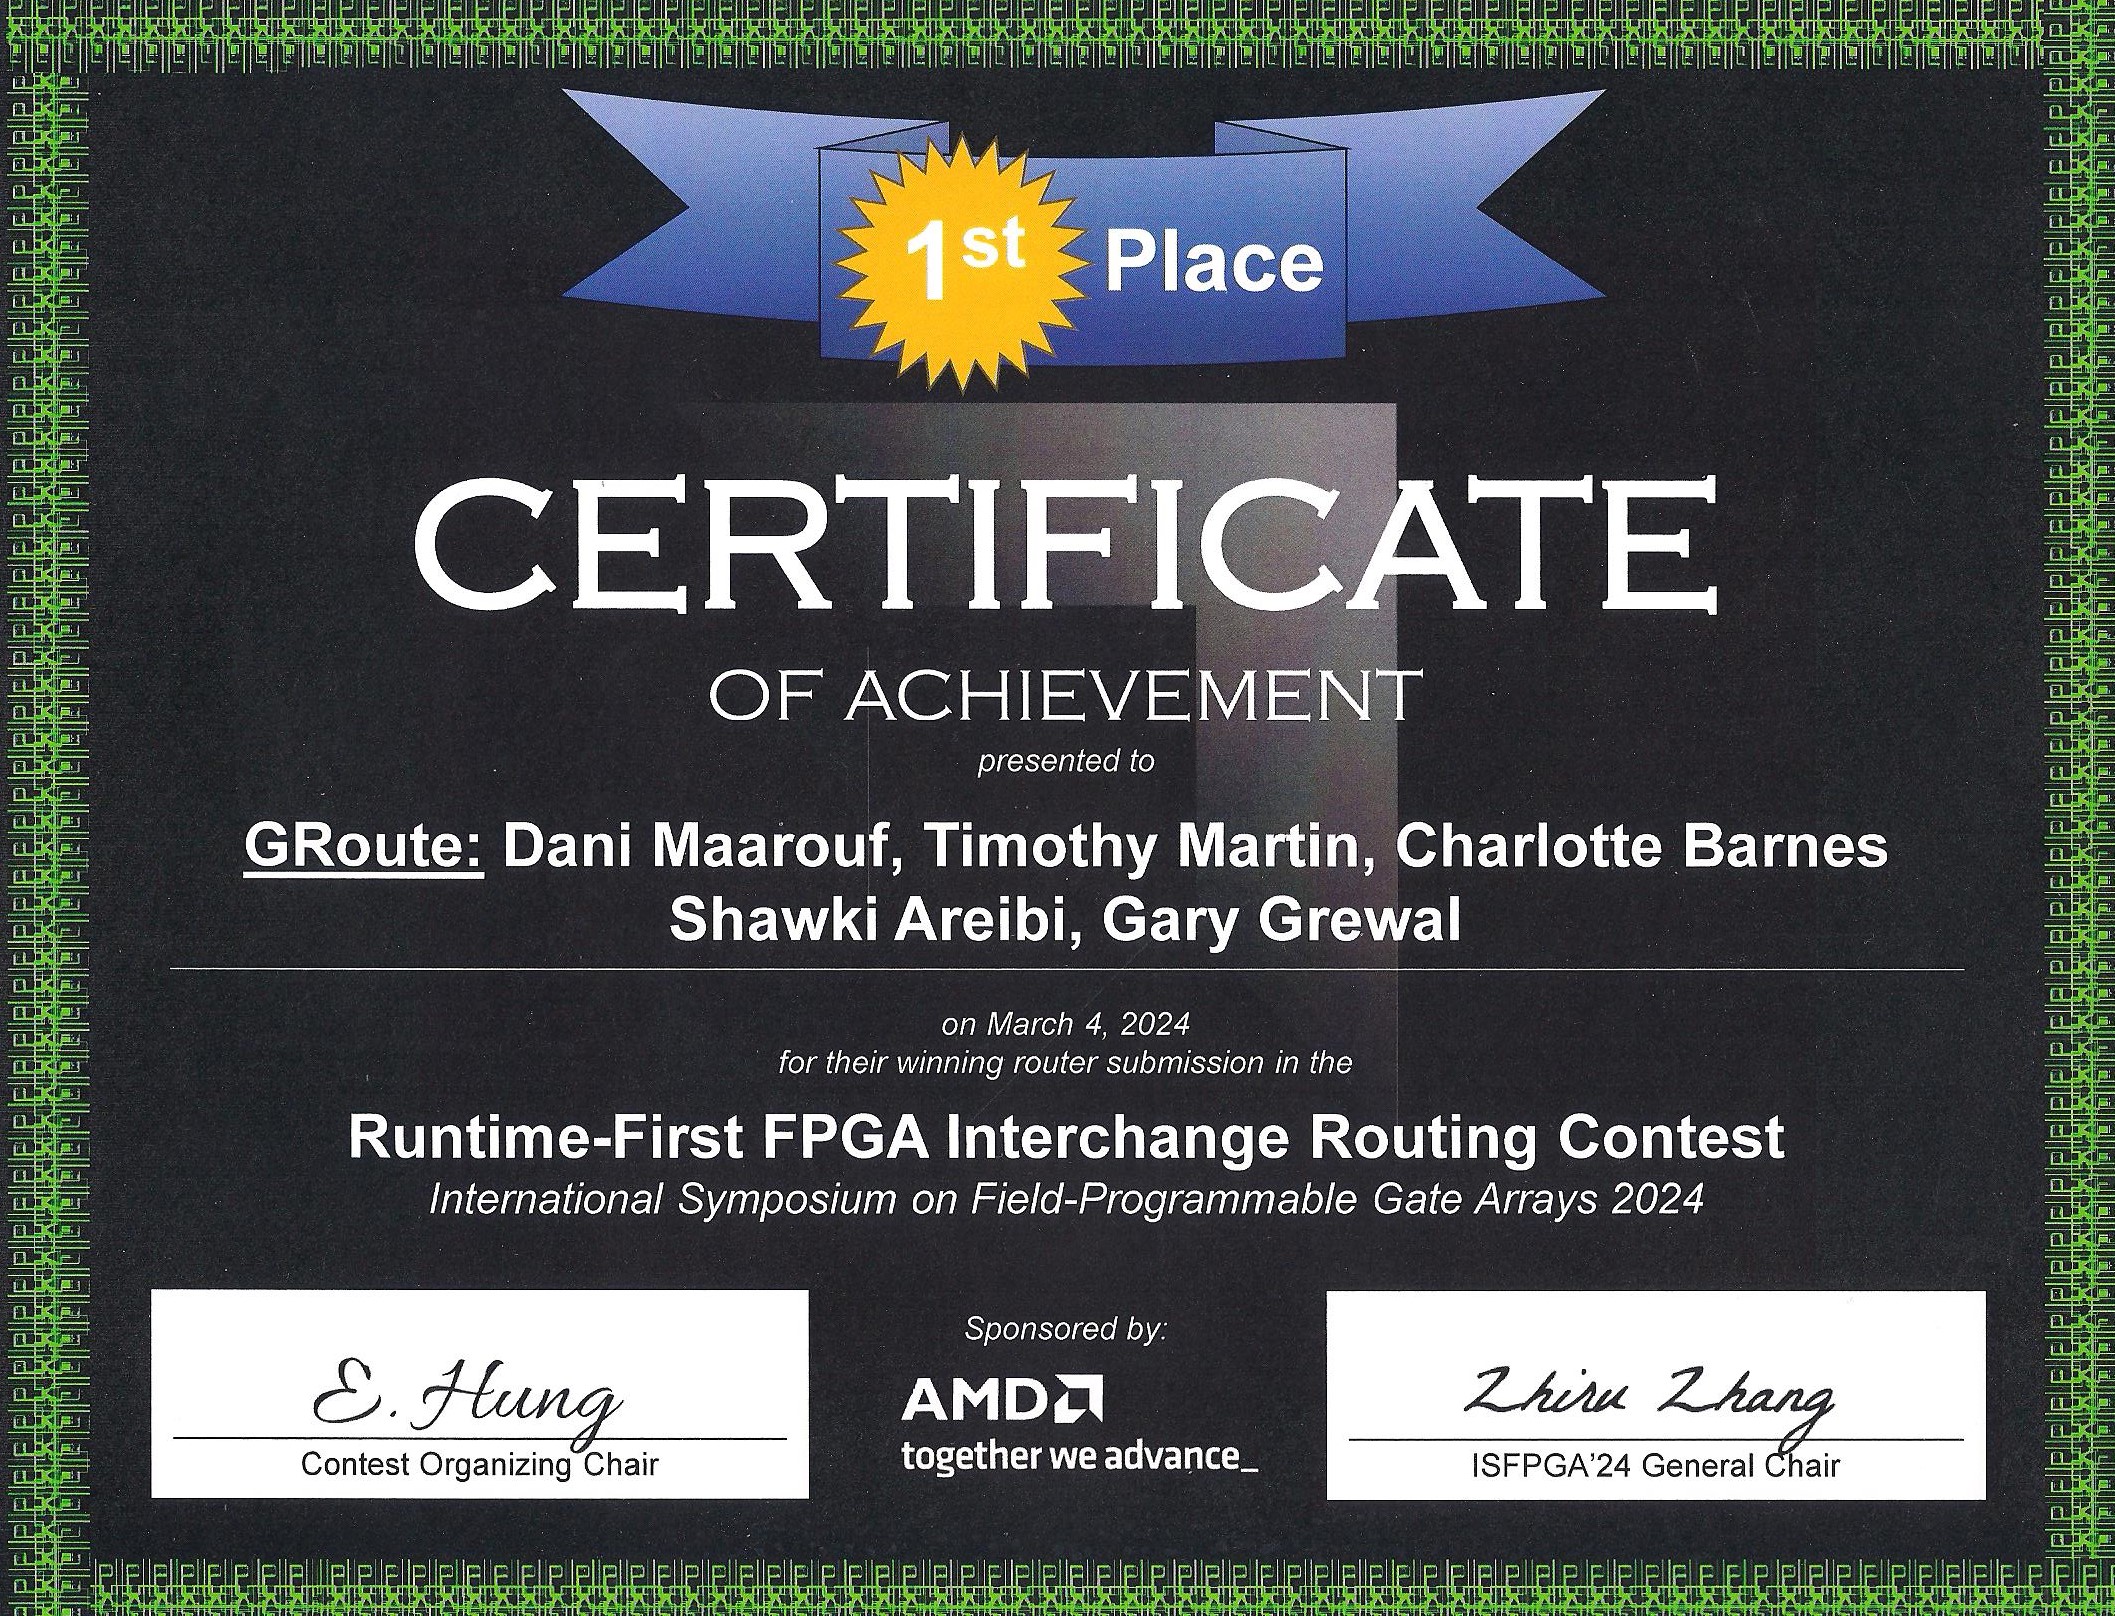 ISFPGA Routing Contest Award 2024